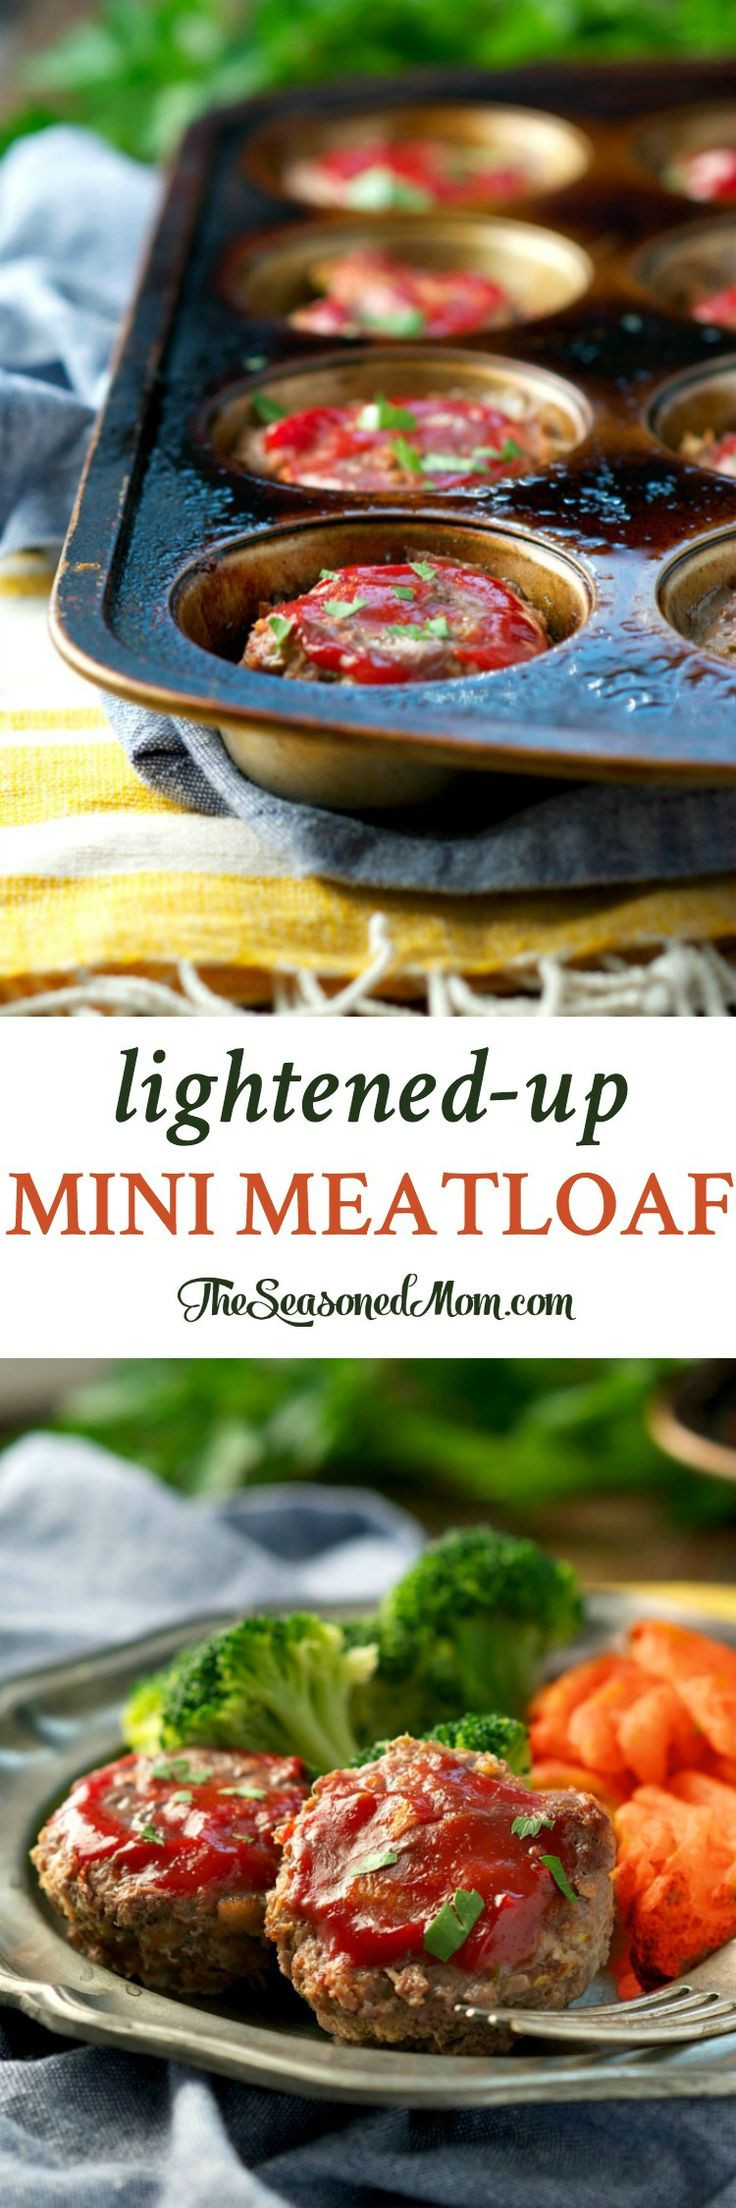 Low Calorie Meatloaf Recipe
 Healthy Mini Meatloaf Recipe